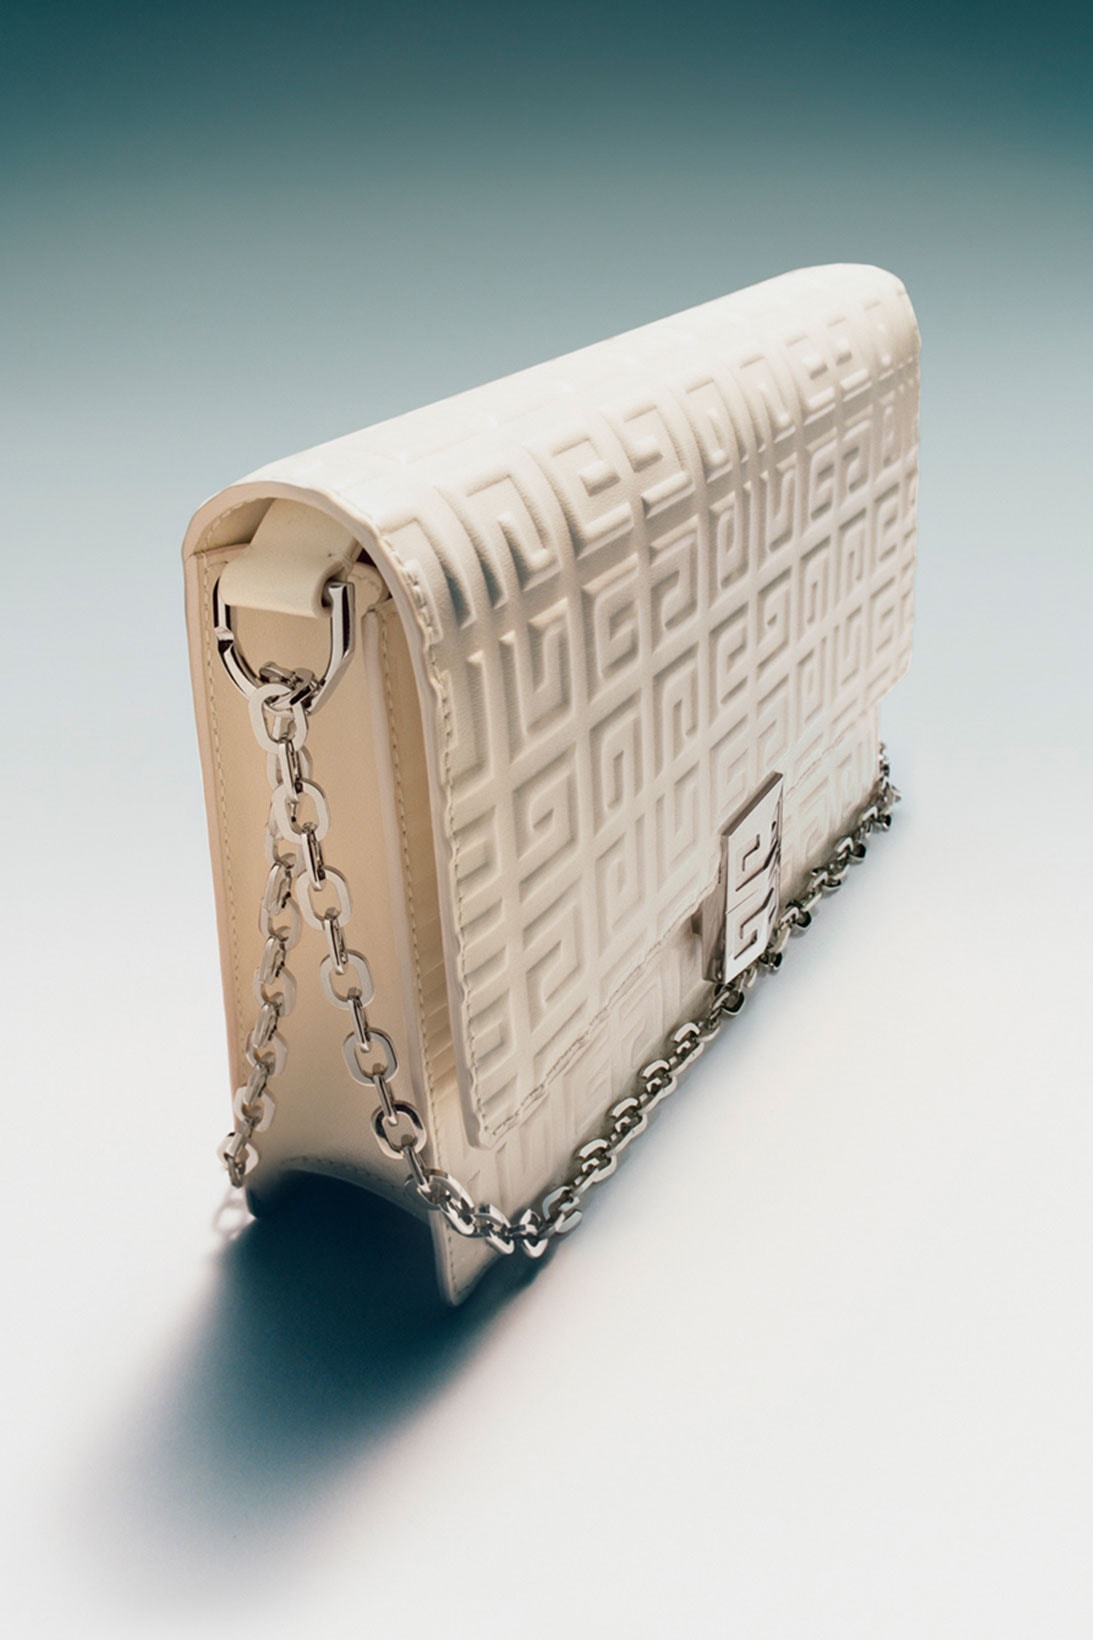 givenchy matthew williams 4g handbag purse design white monogram embossed chain strap